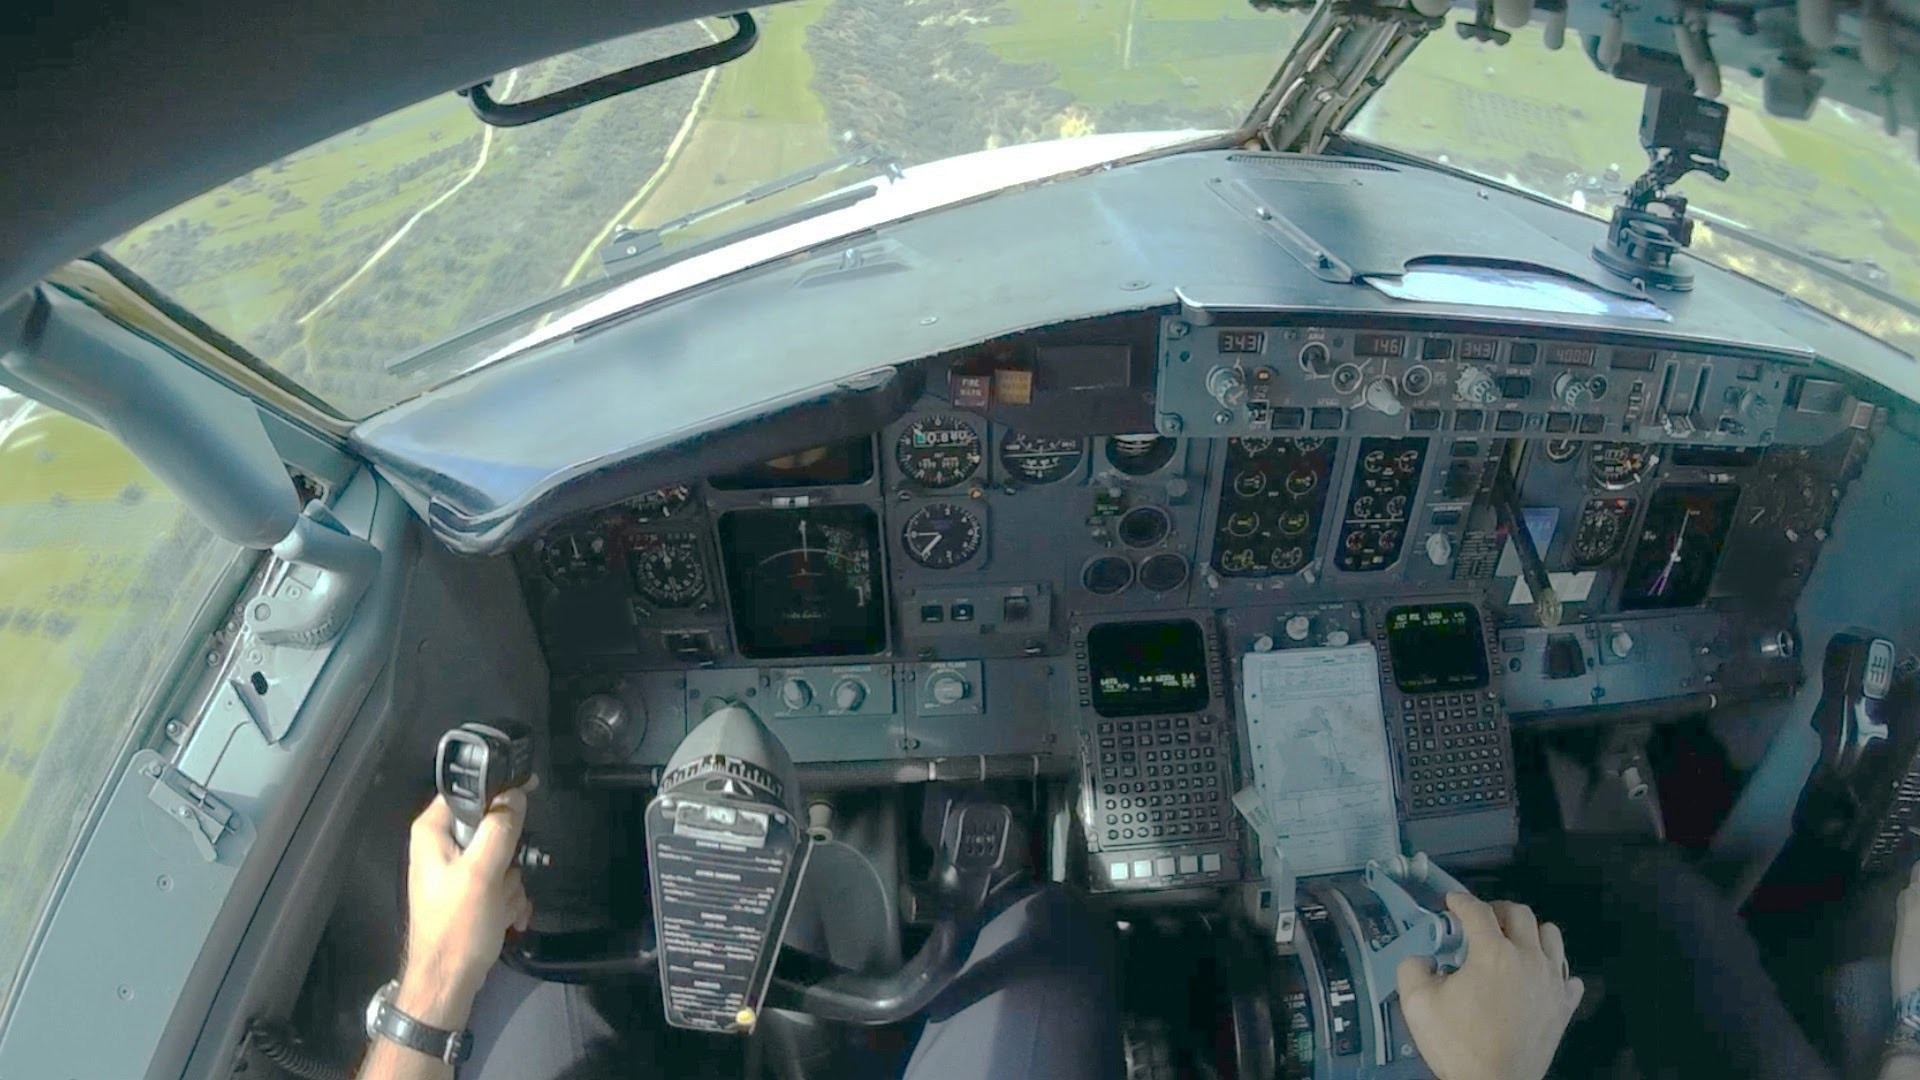 1920x1080 Boeing 737-400 Cockpit Flight LCLK-LGTS | Cockpit Takeoff and Landing |  GoPro Full Flight - YouTube